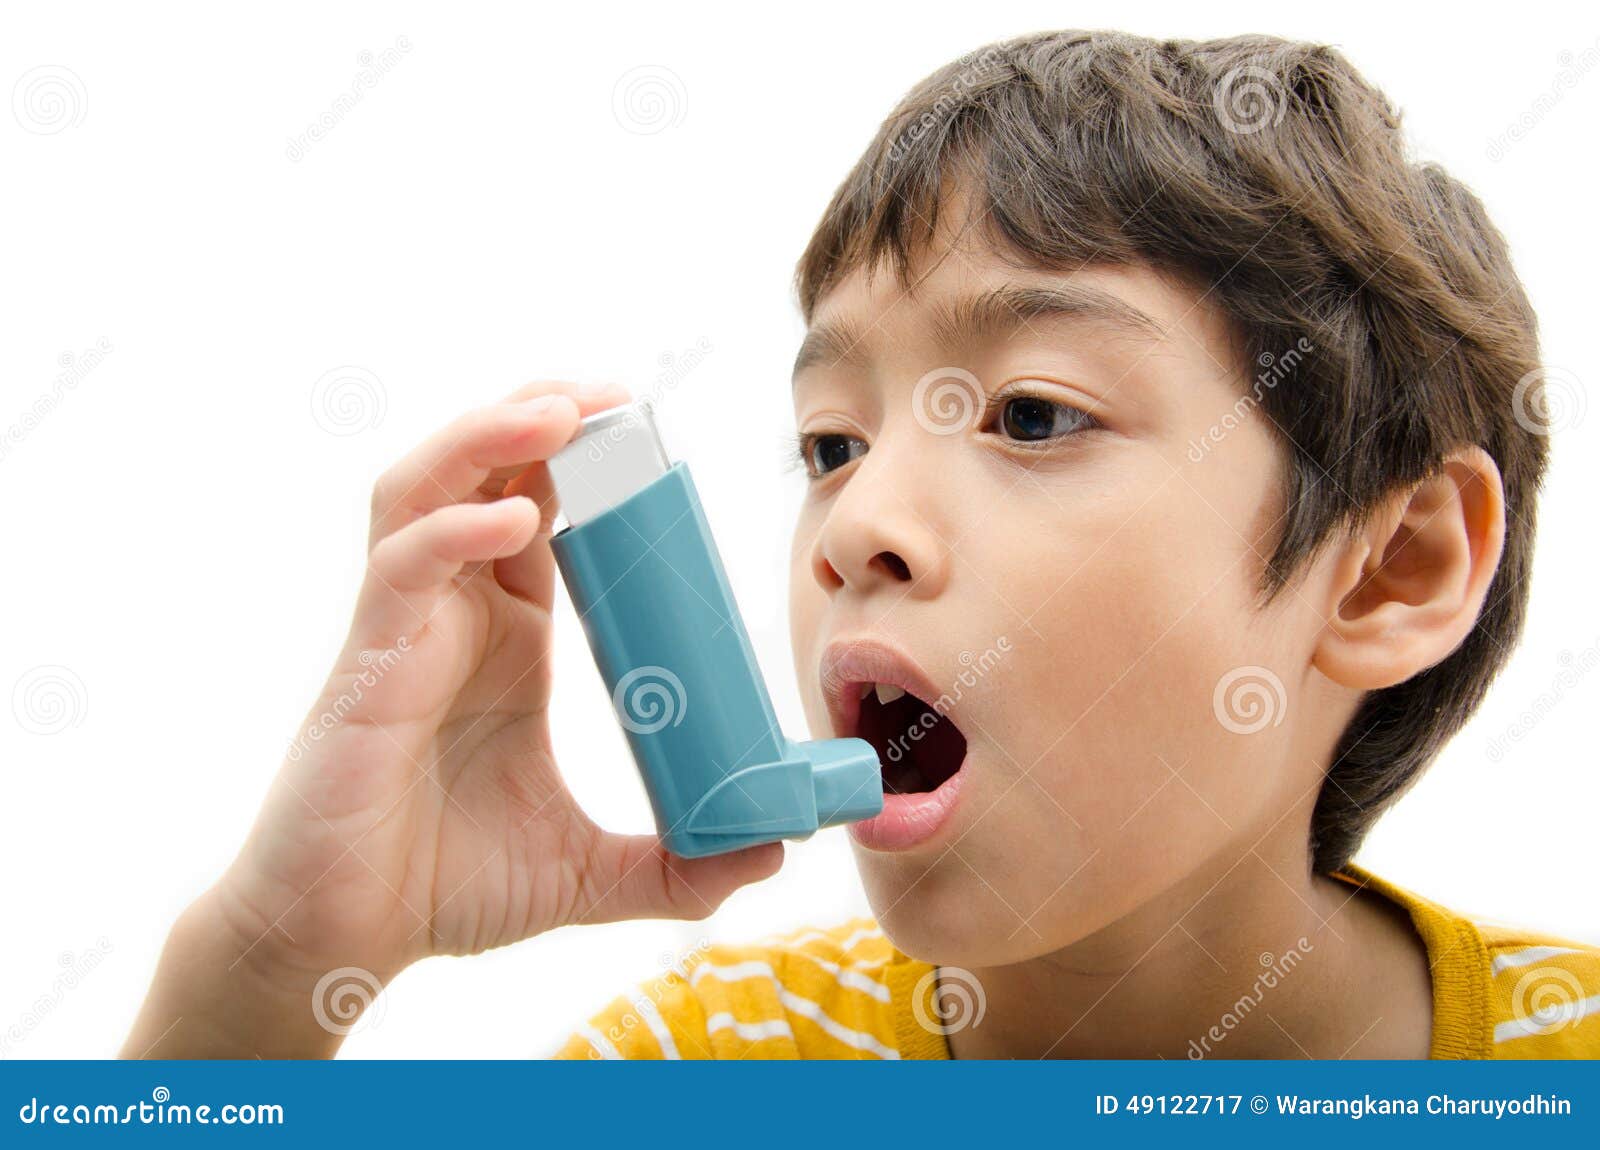 little boy using asthma inhaler for breathing